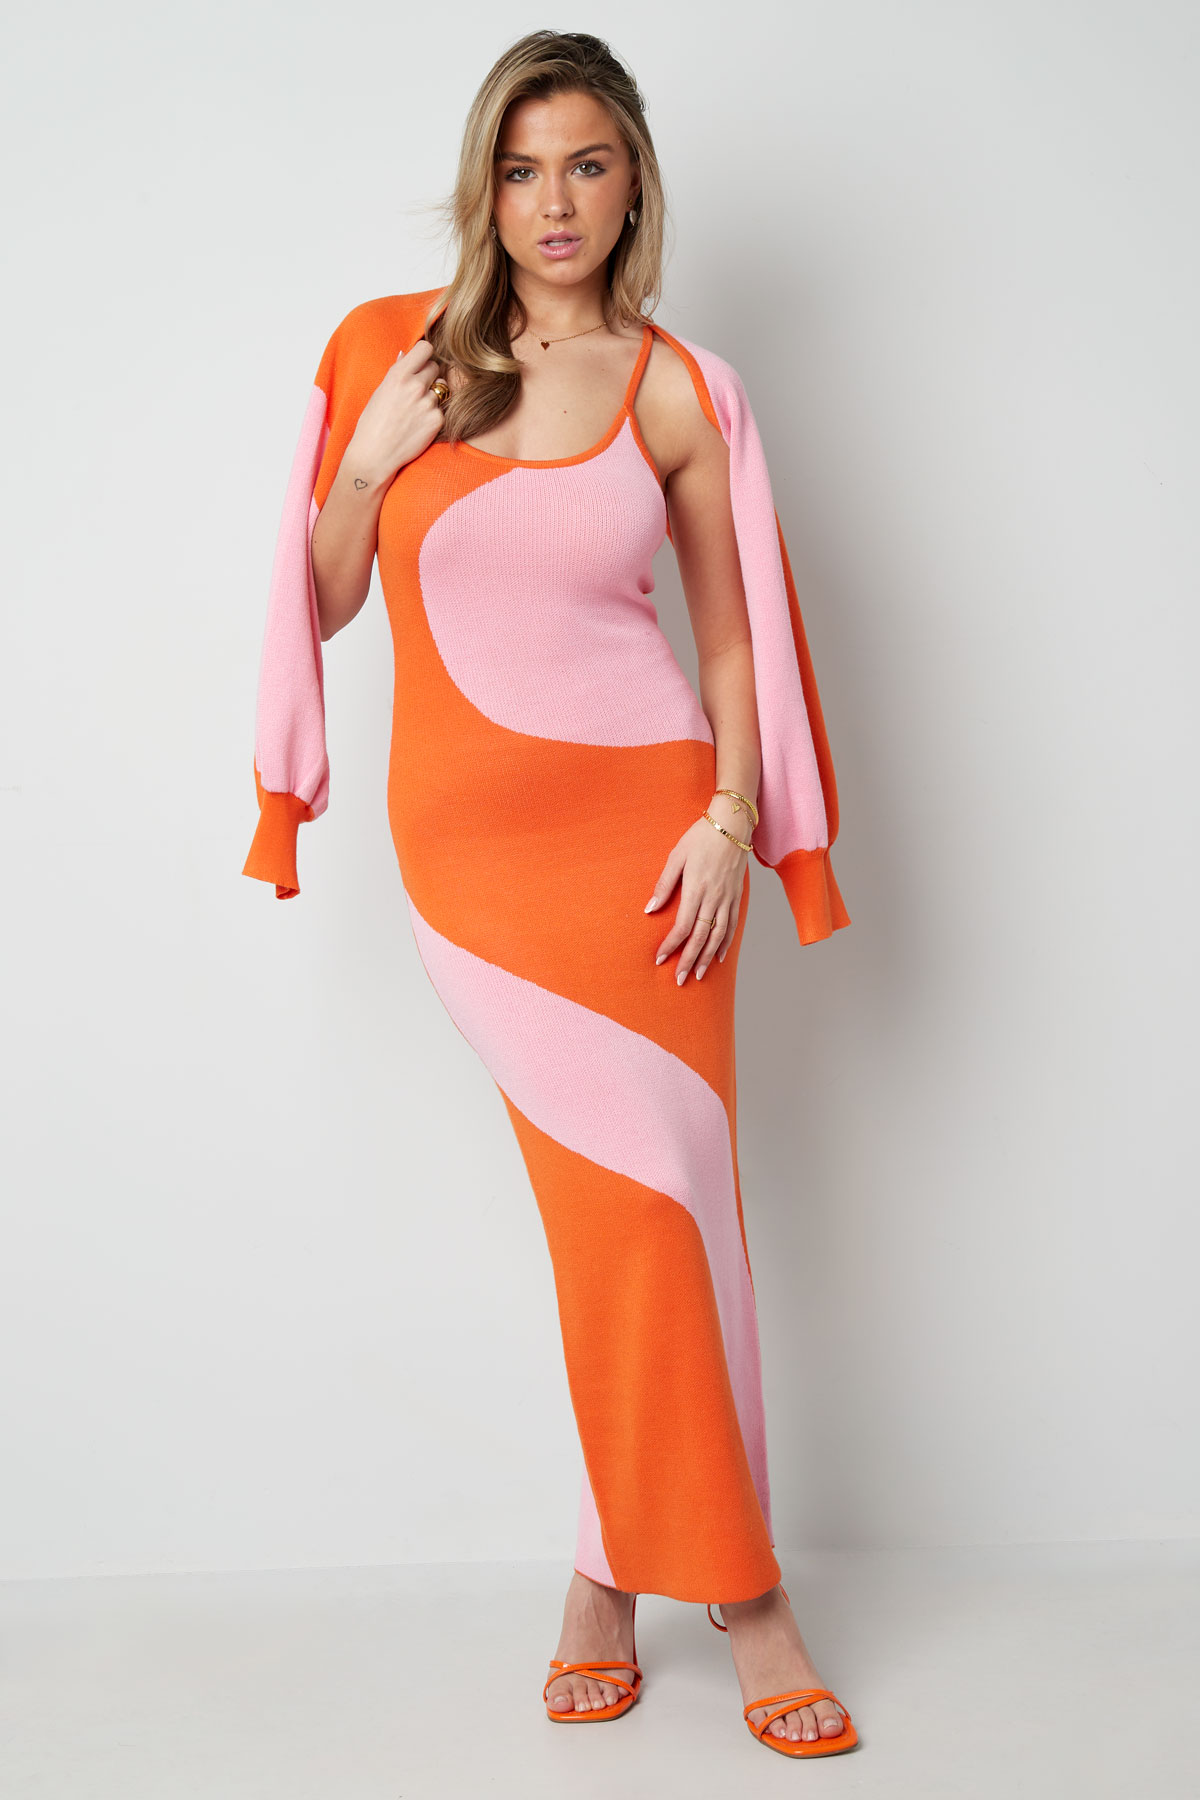 Organik desenli elbise - pembe turuncu h5 Resim6